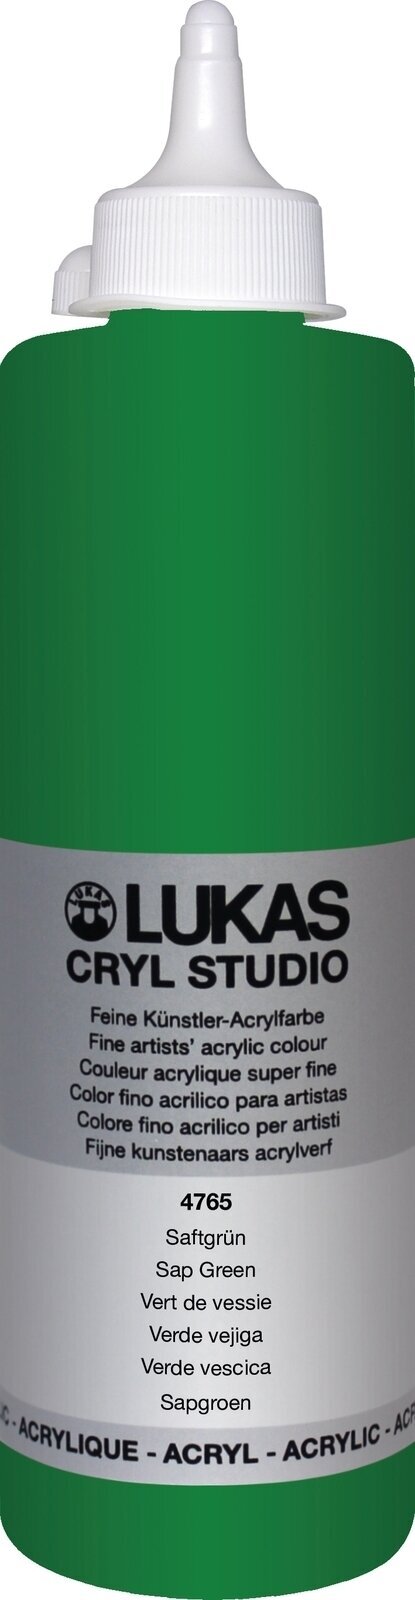 Peinture acrylique Lukas Cryl Studio Peinture acrylique 500 ml Sap Green